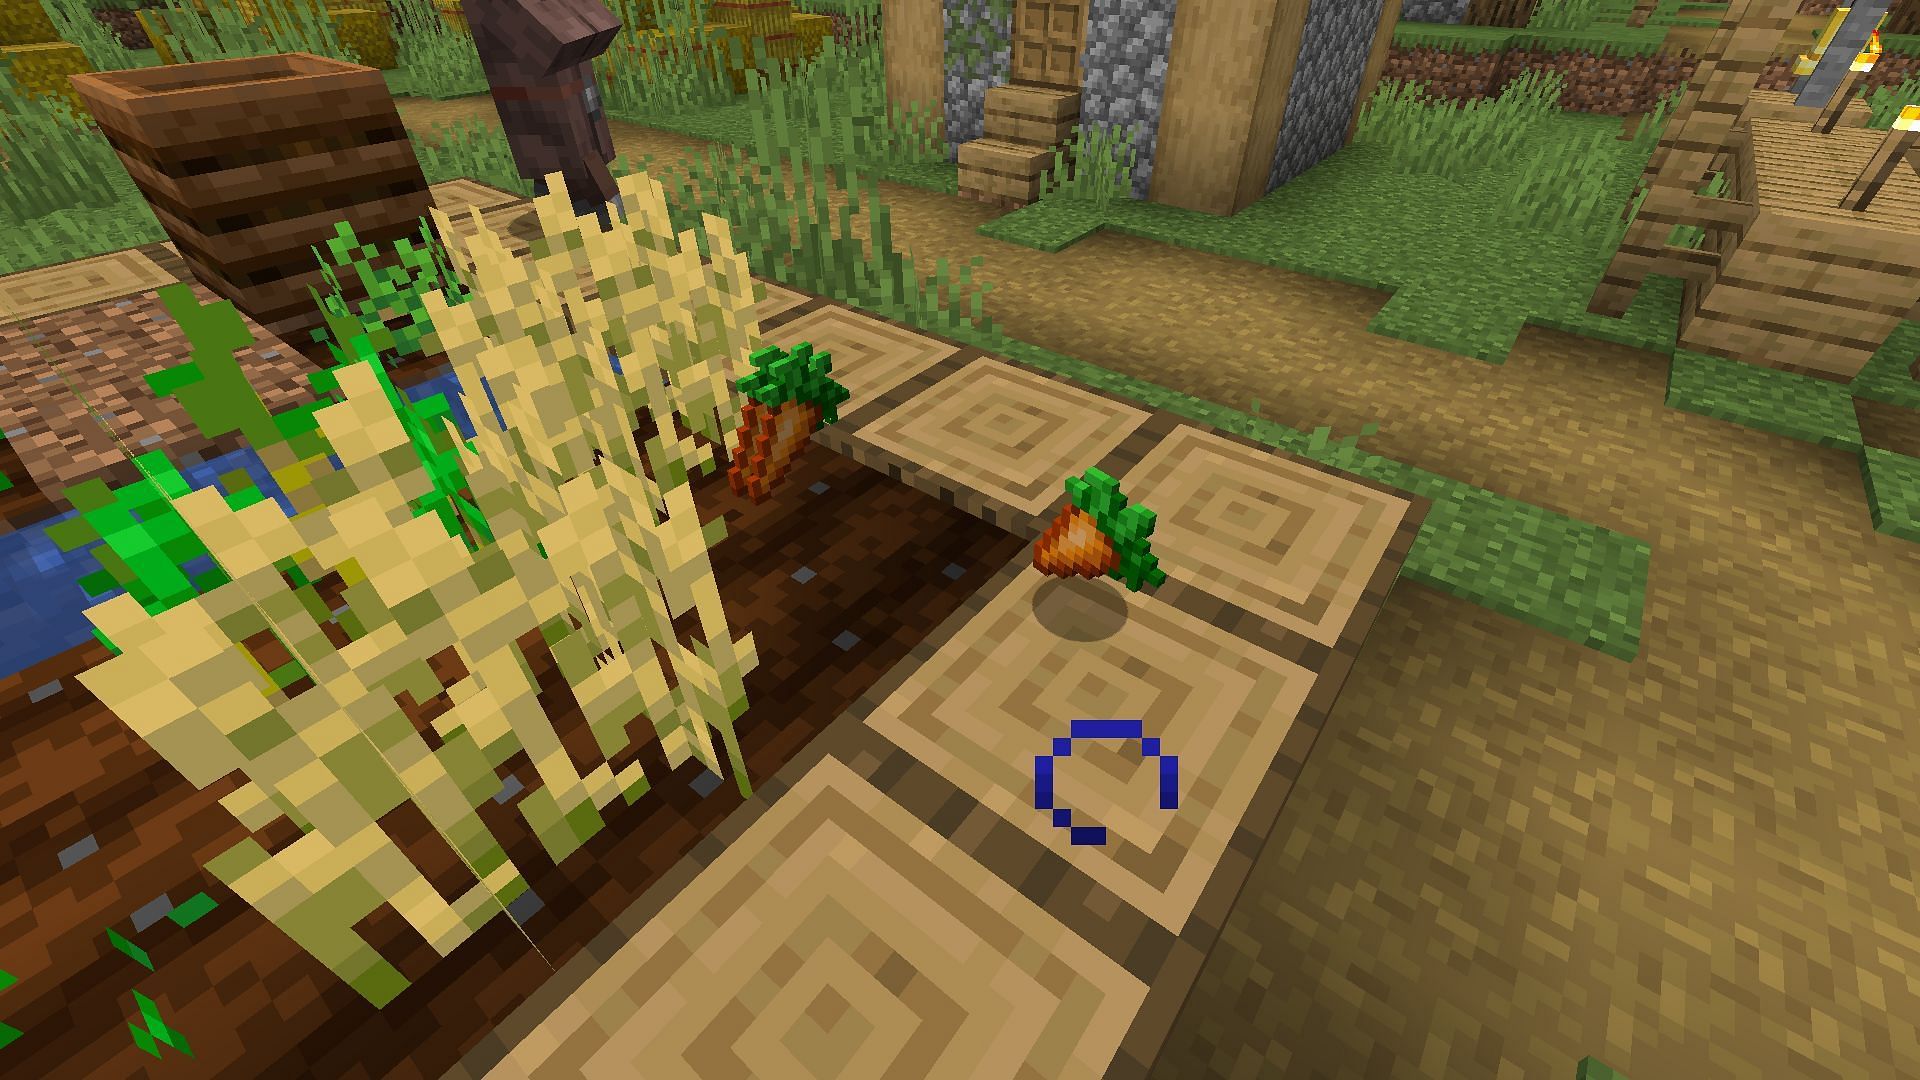 A carrot farm in a village in Minecraft (Image via Minecraft)